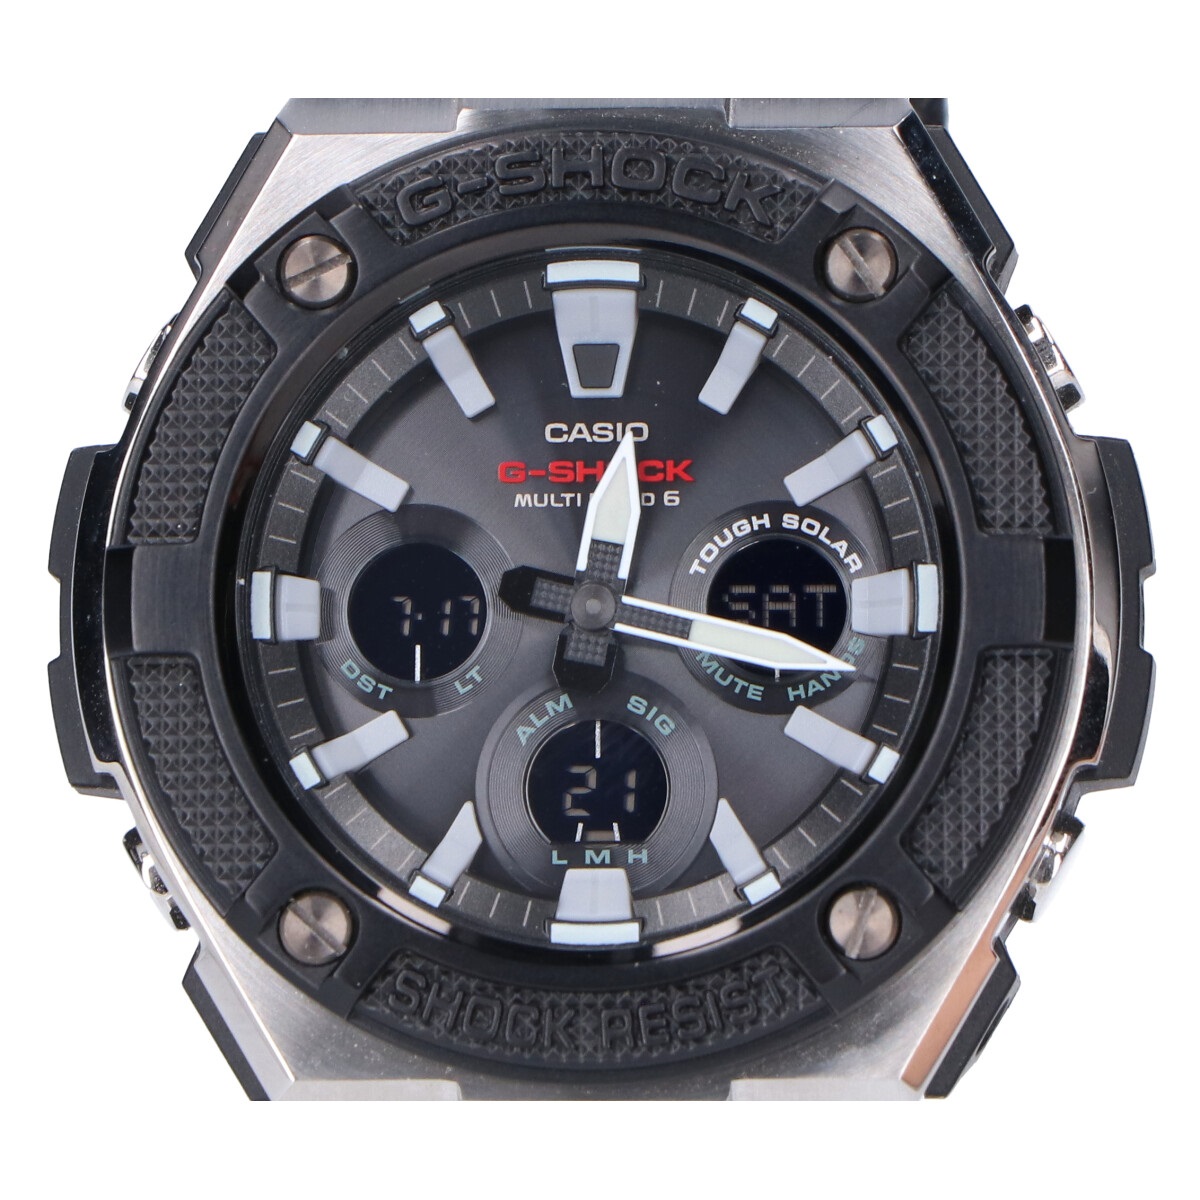 G-SHOCKのGST-W330AC-1AJF マルチバンド6 タフソーラー電波 腕時計の買取実績です。